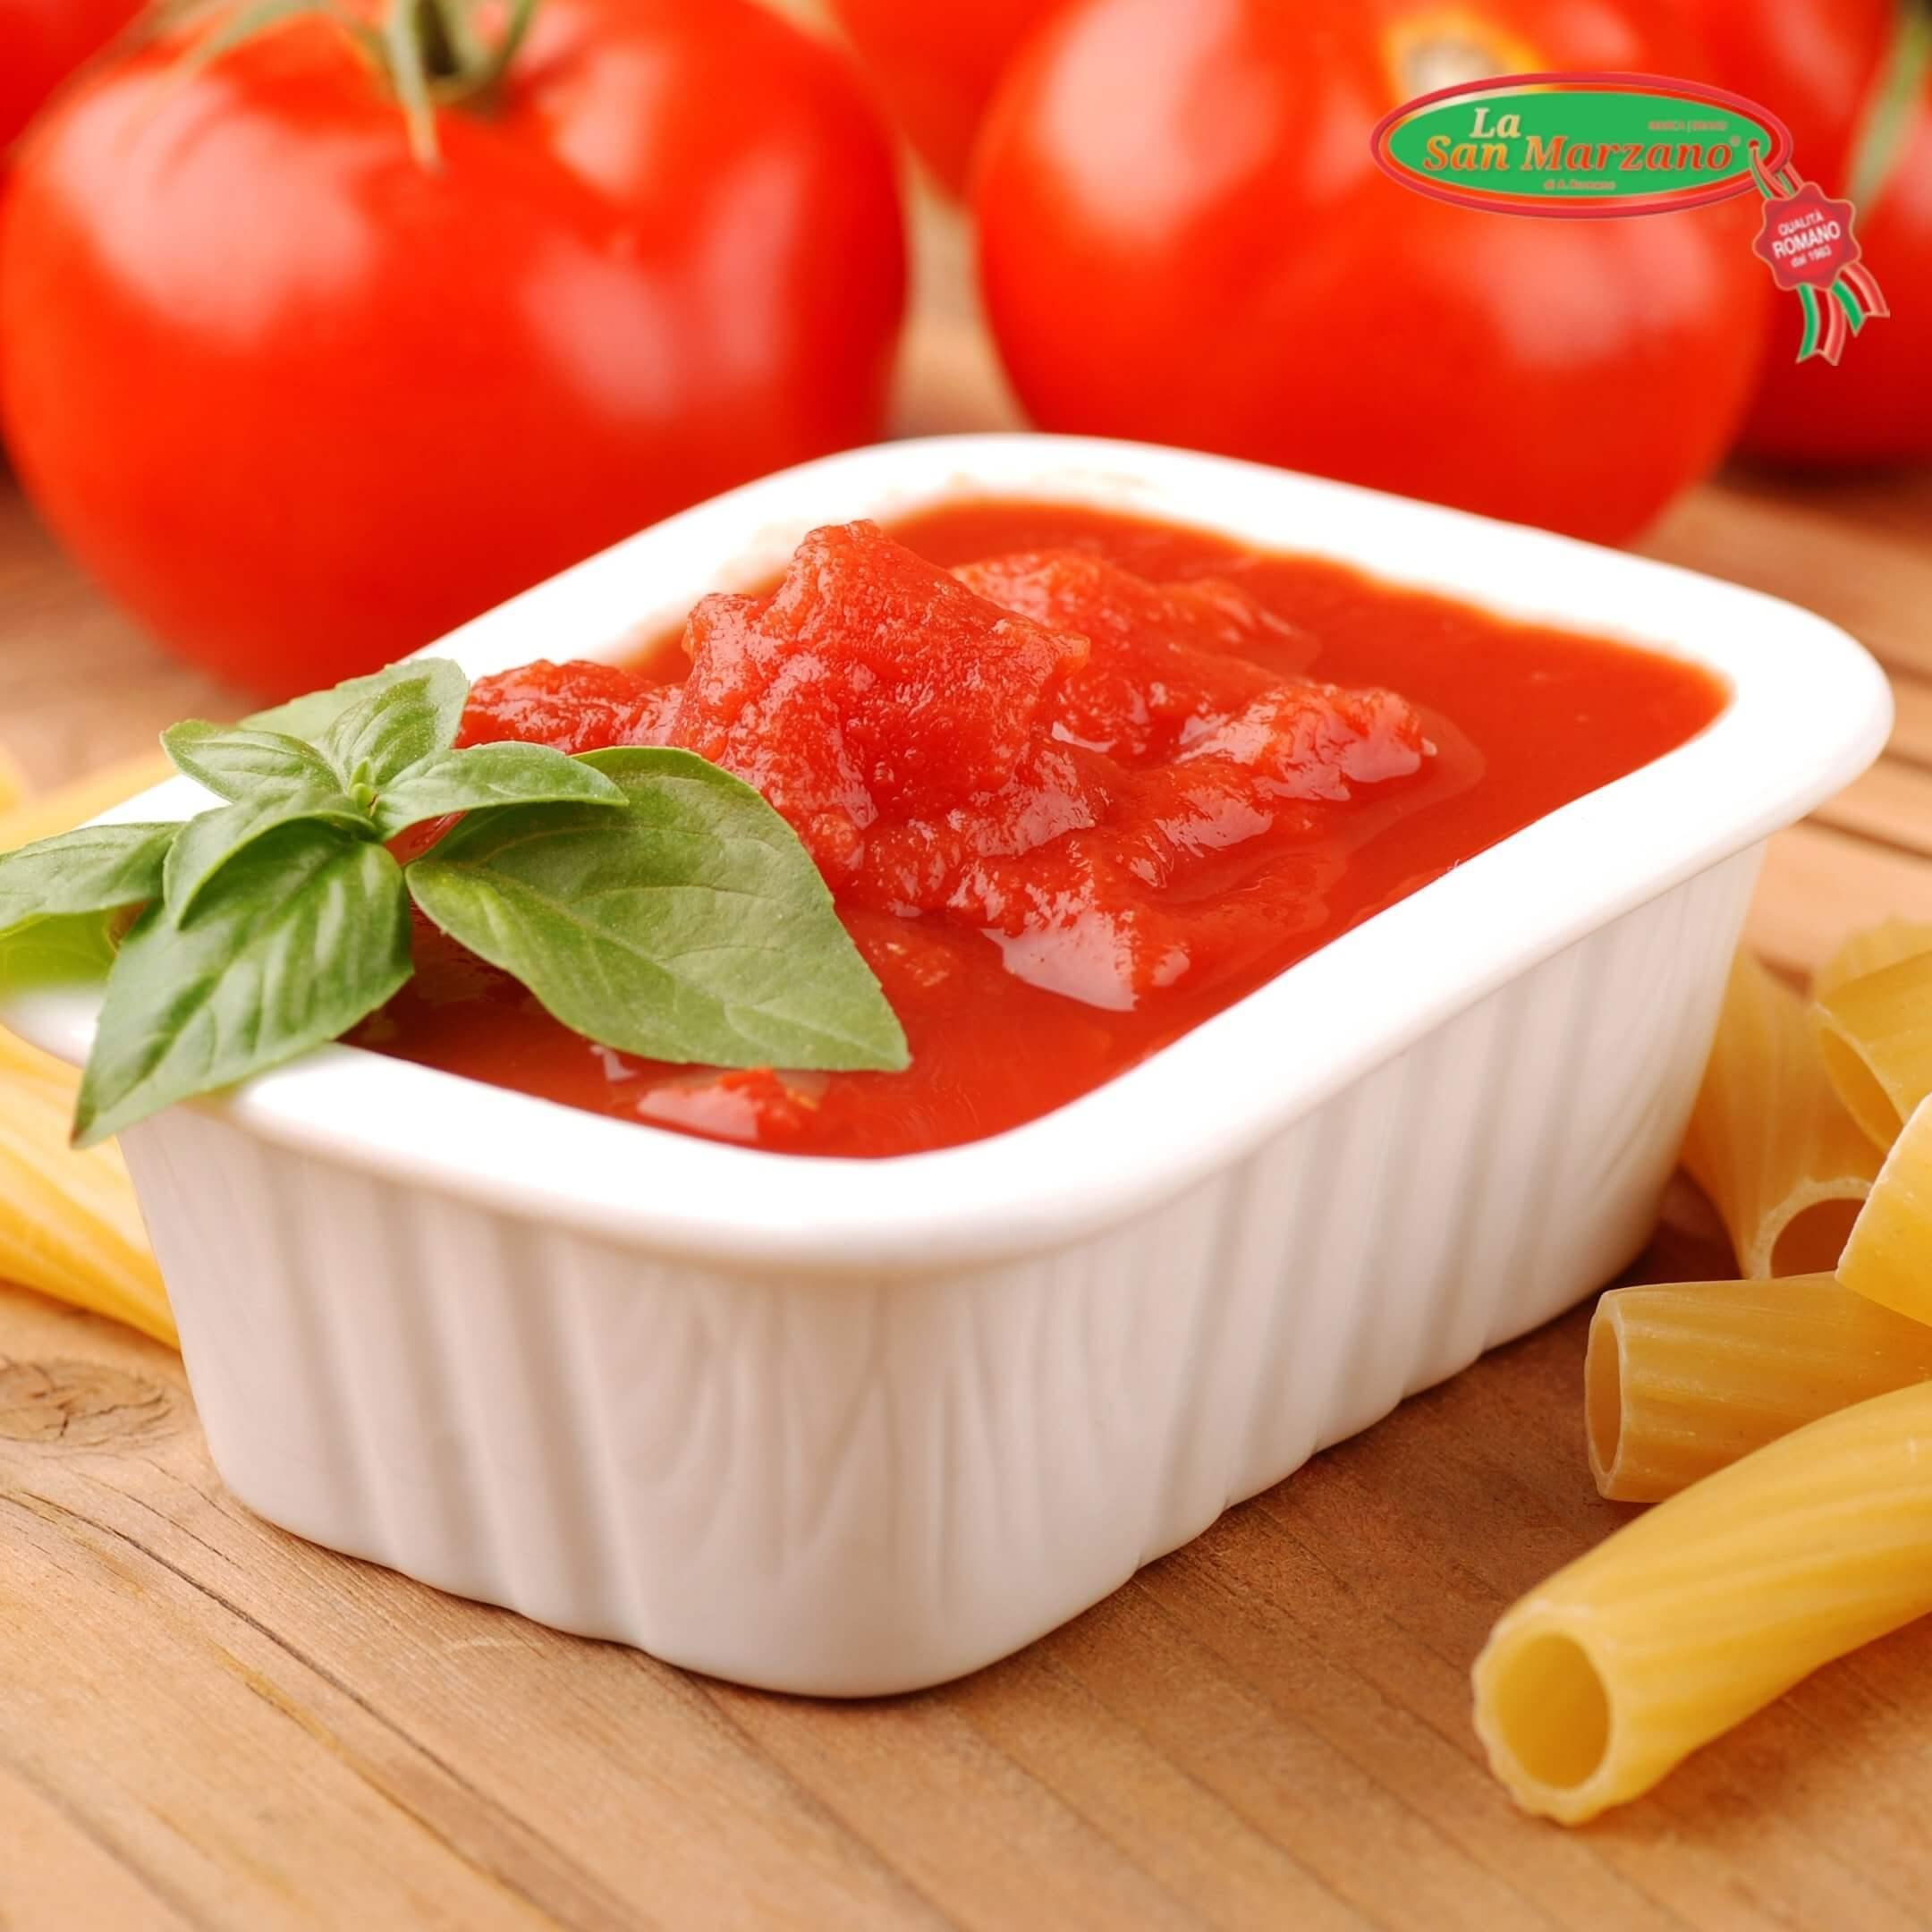 La San Marzano Basil Tomato Sauce 24 oz. - Wholesale Italian Food